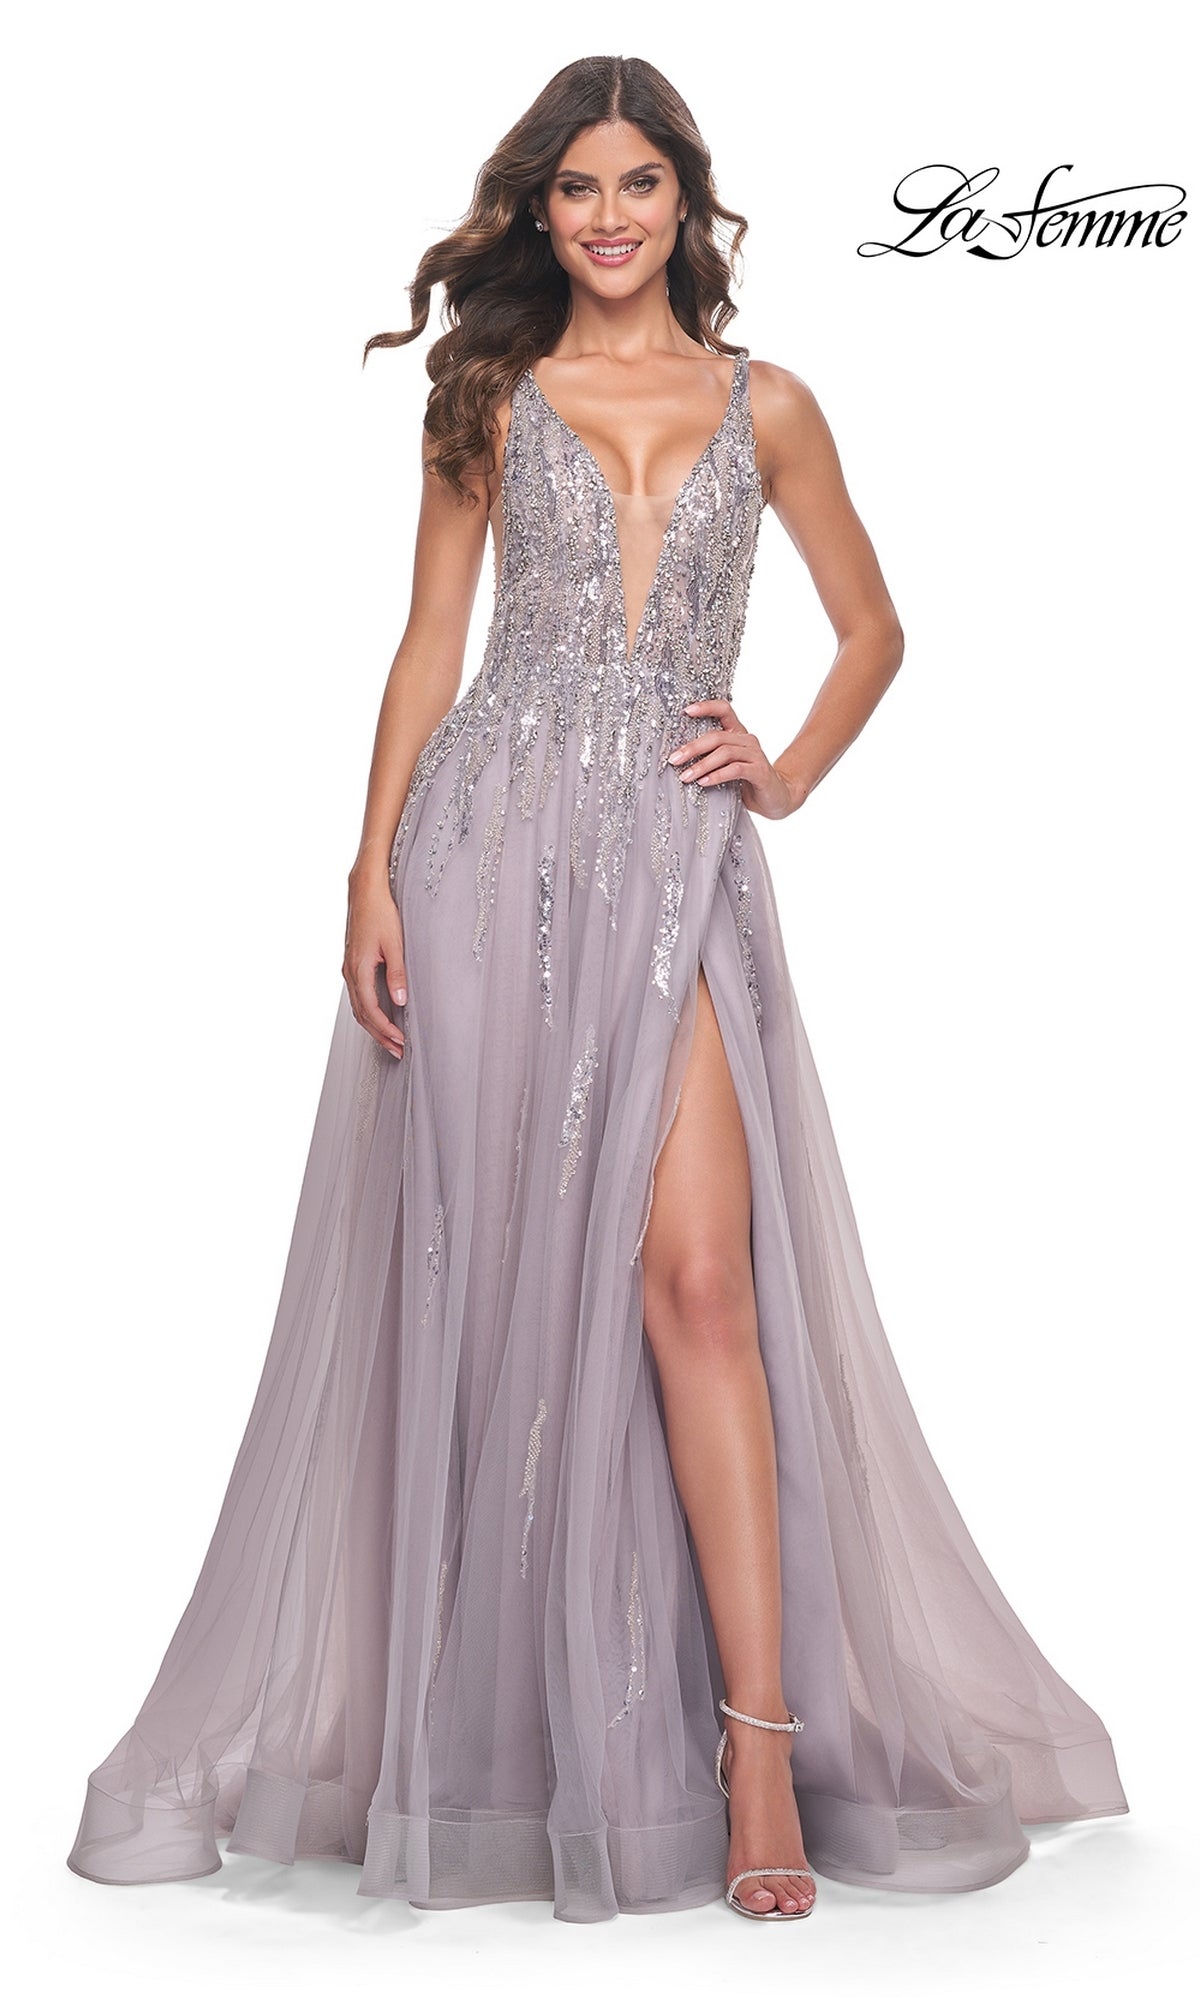 Dusty Mauve La Femme 31995 Formal Prom Dress